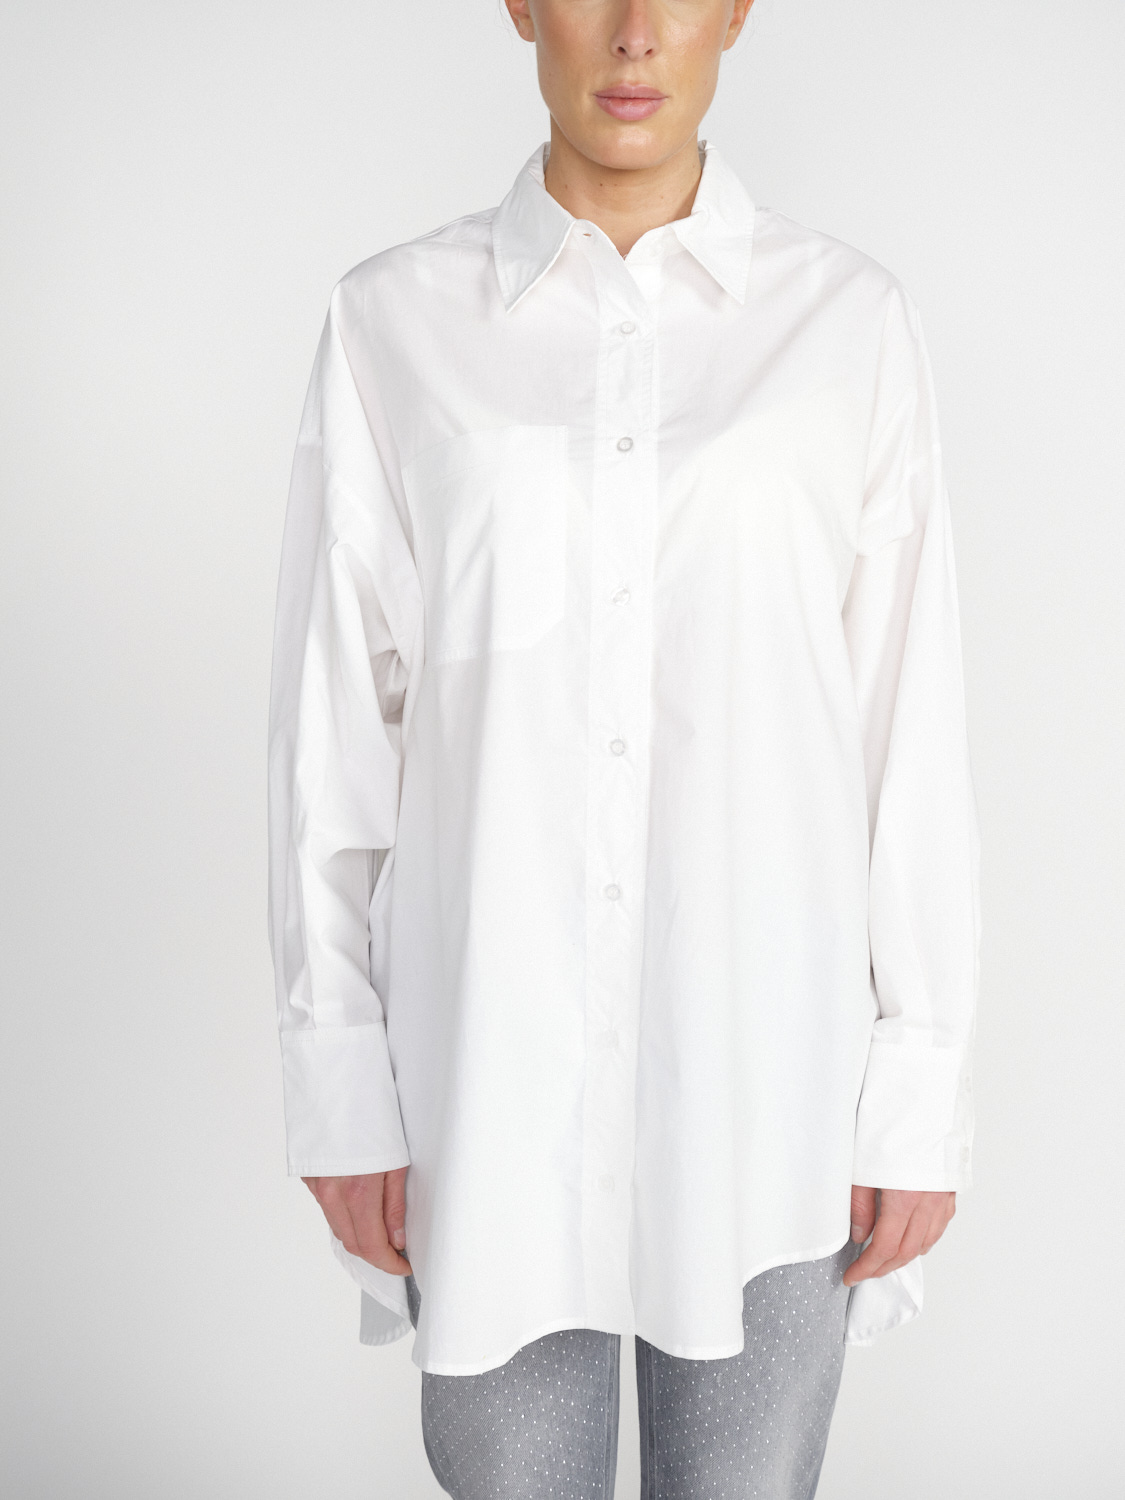 Gitta Banko Oversized Bluse aus Baumwolle   blanco Talla única